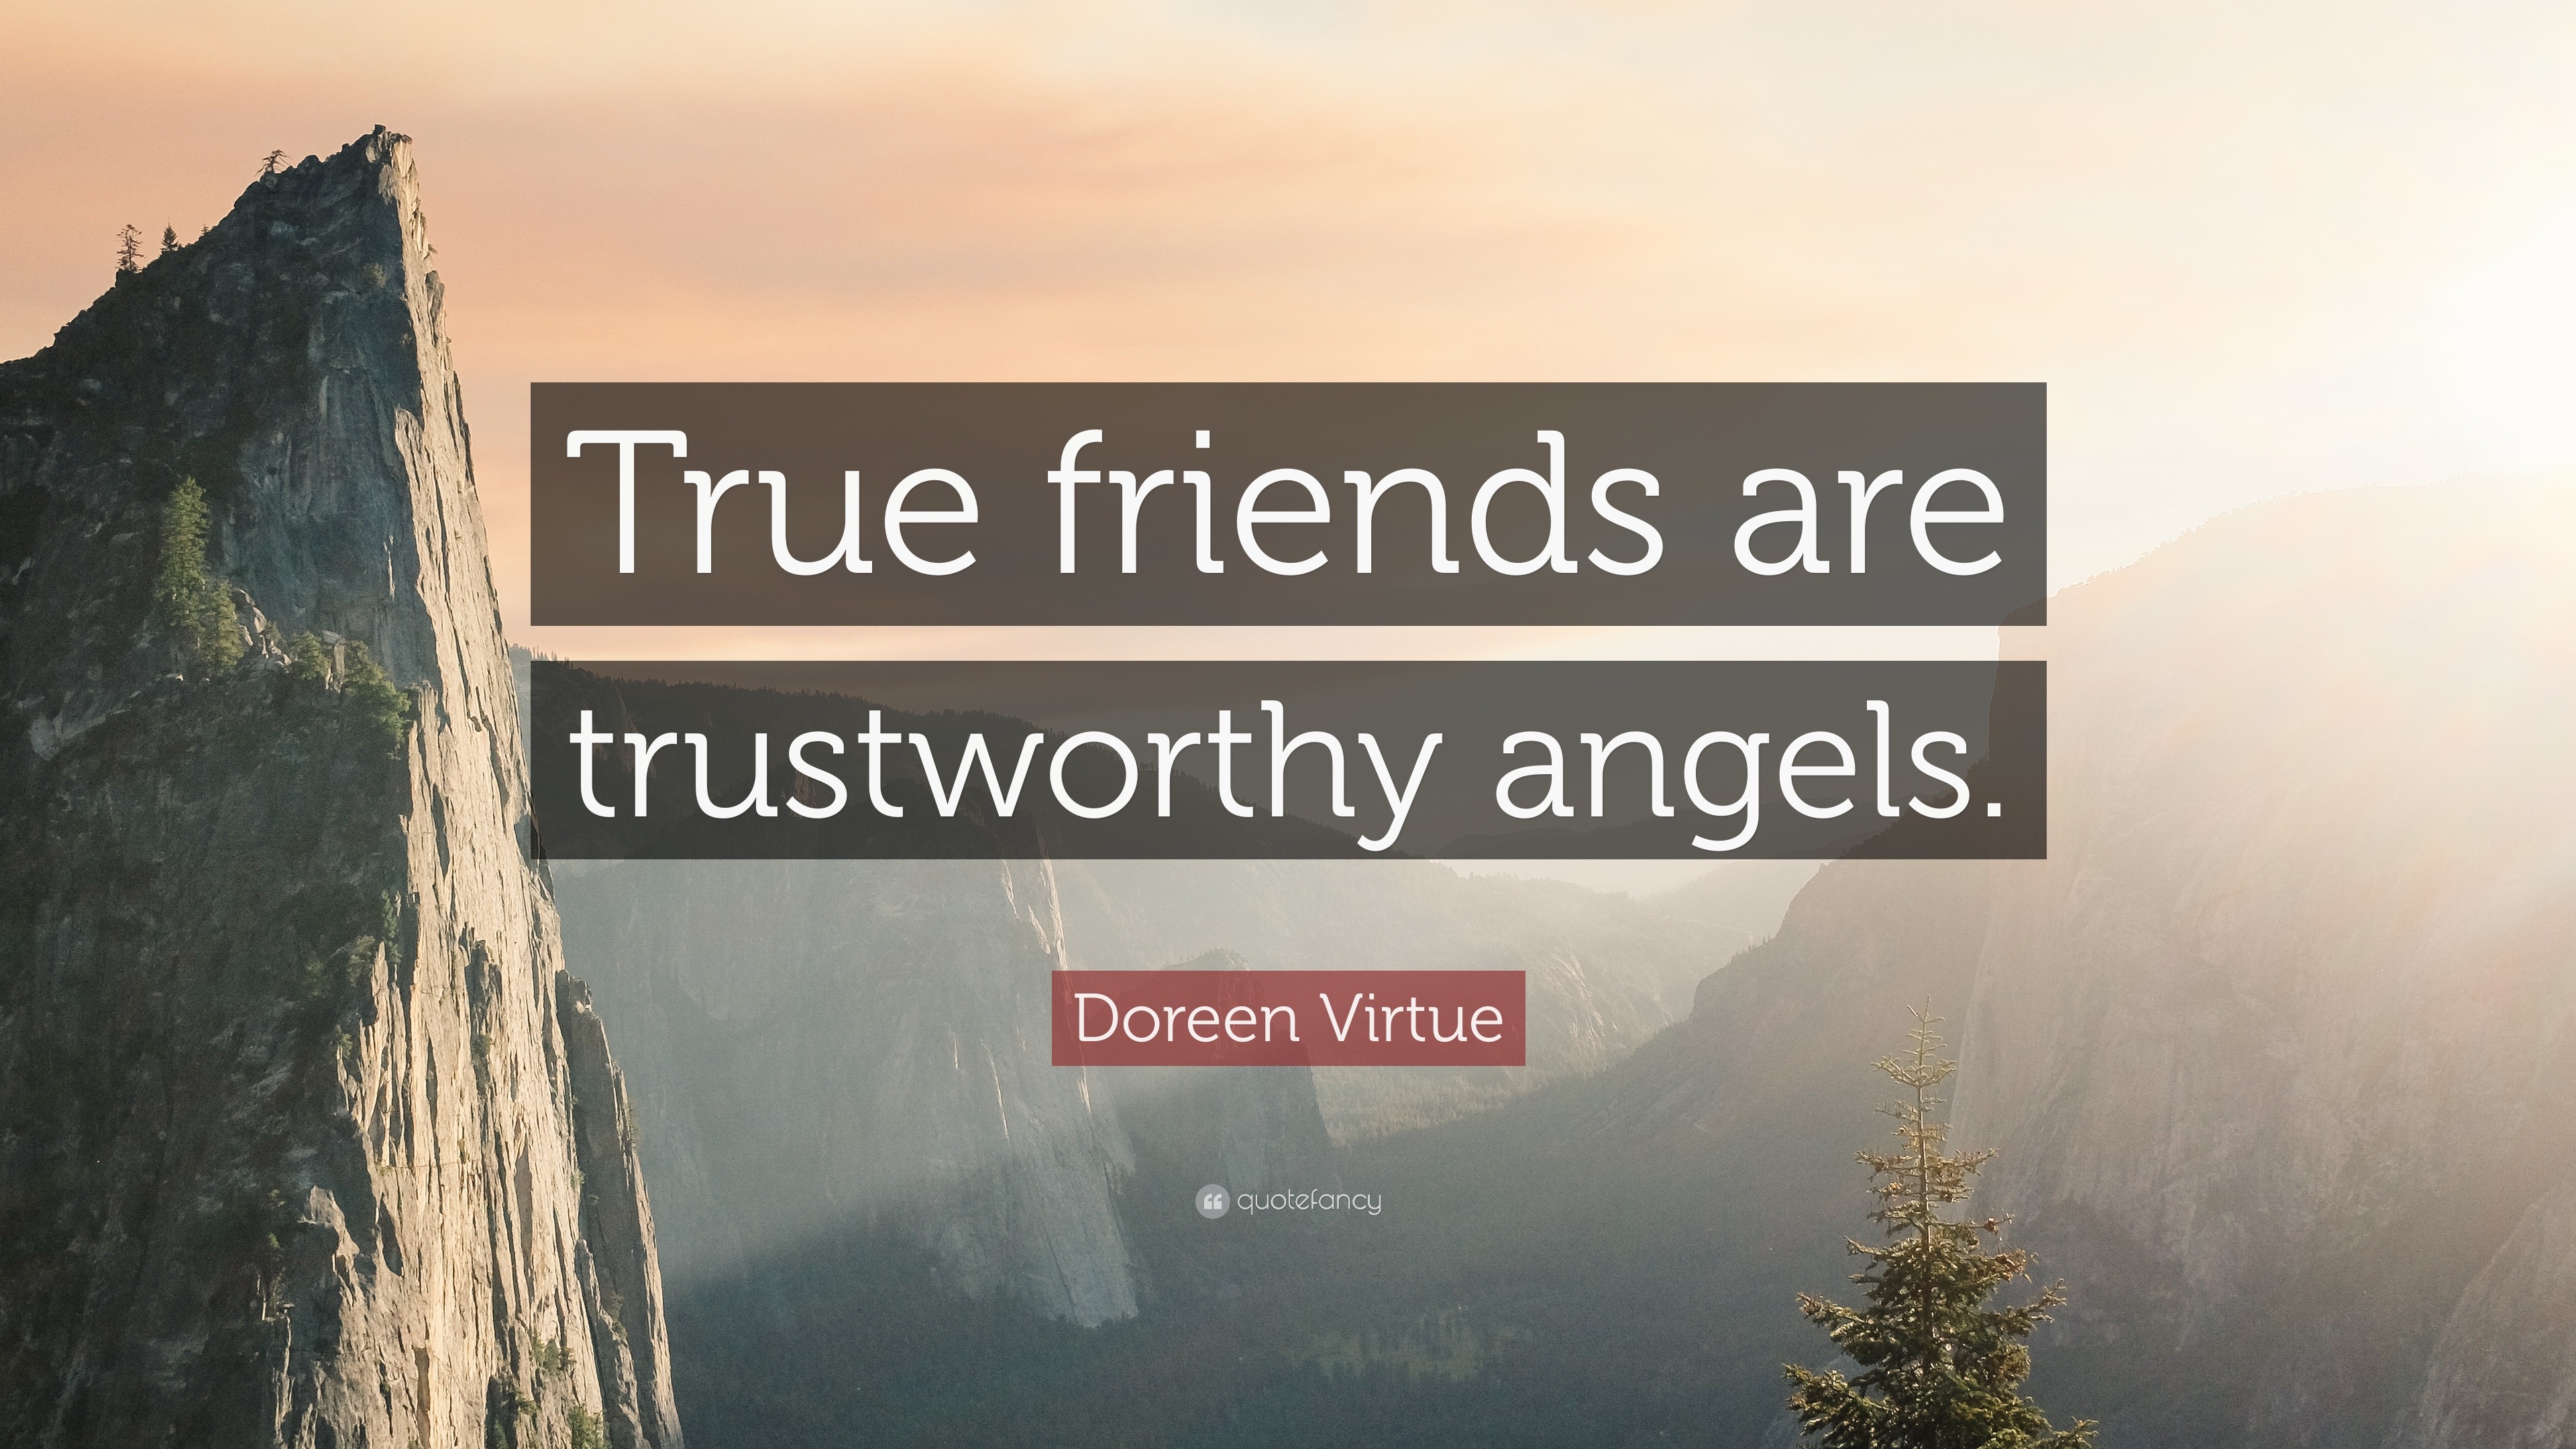 trustworthy friends